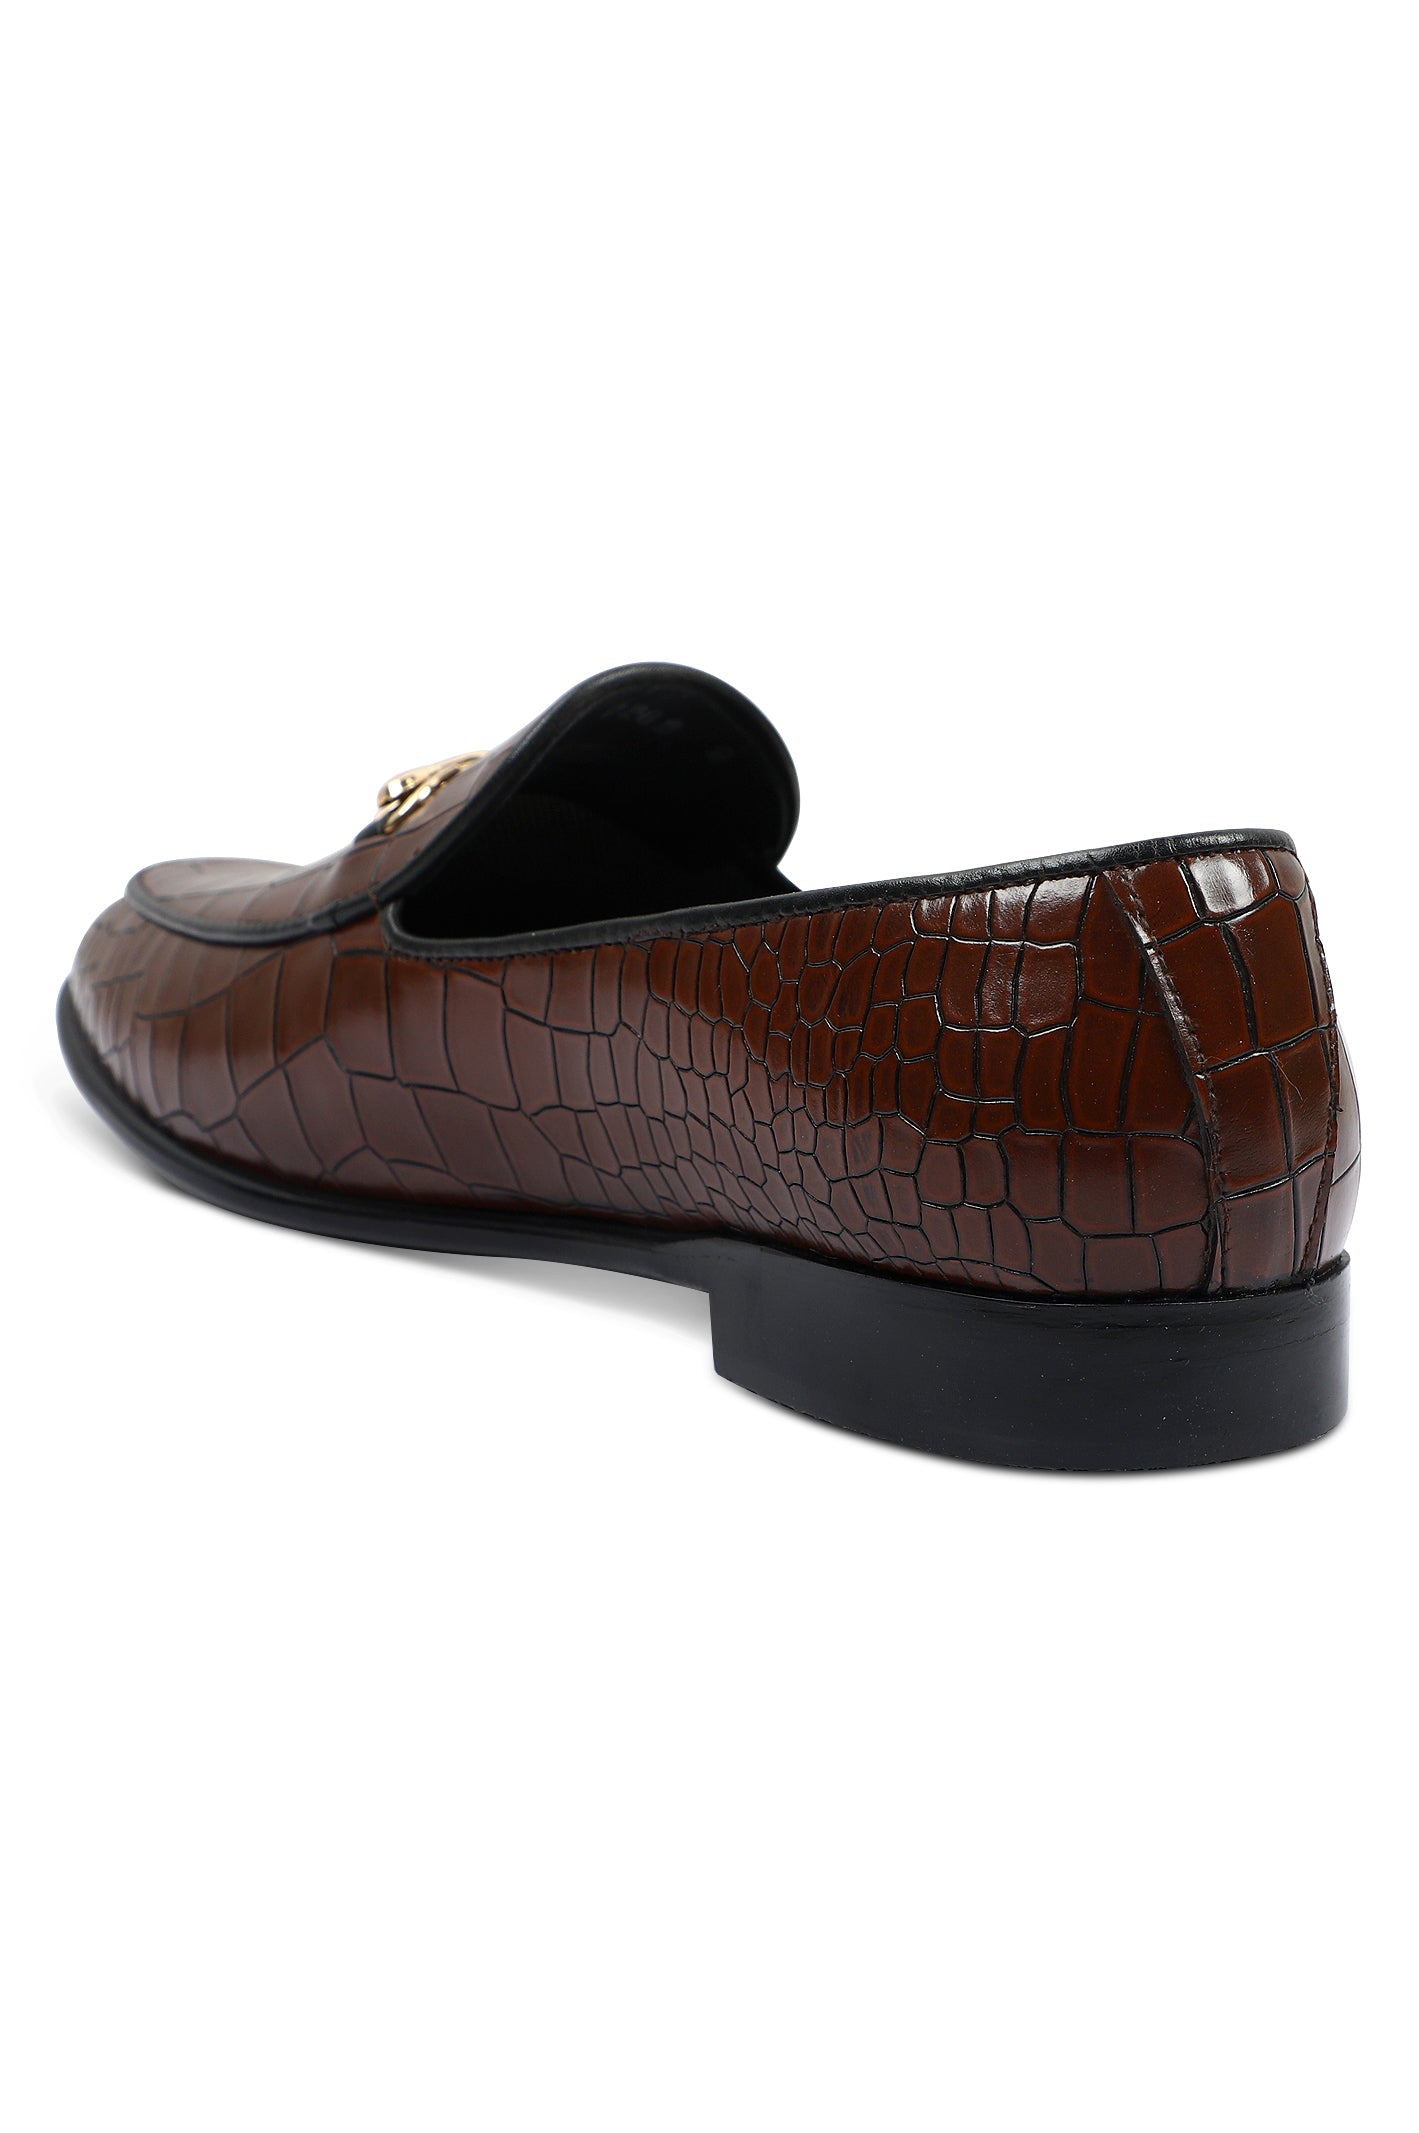 Formal Shoes For Men in Brown SKU: SMF-0200-BROWN - Diners